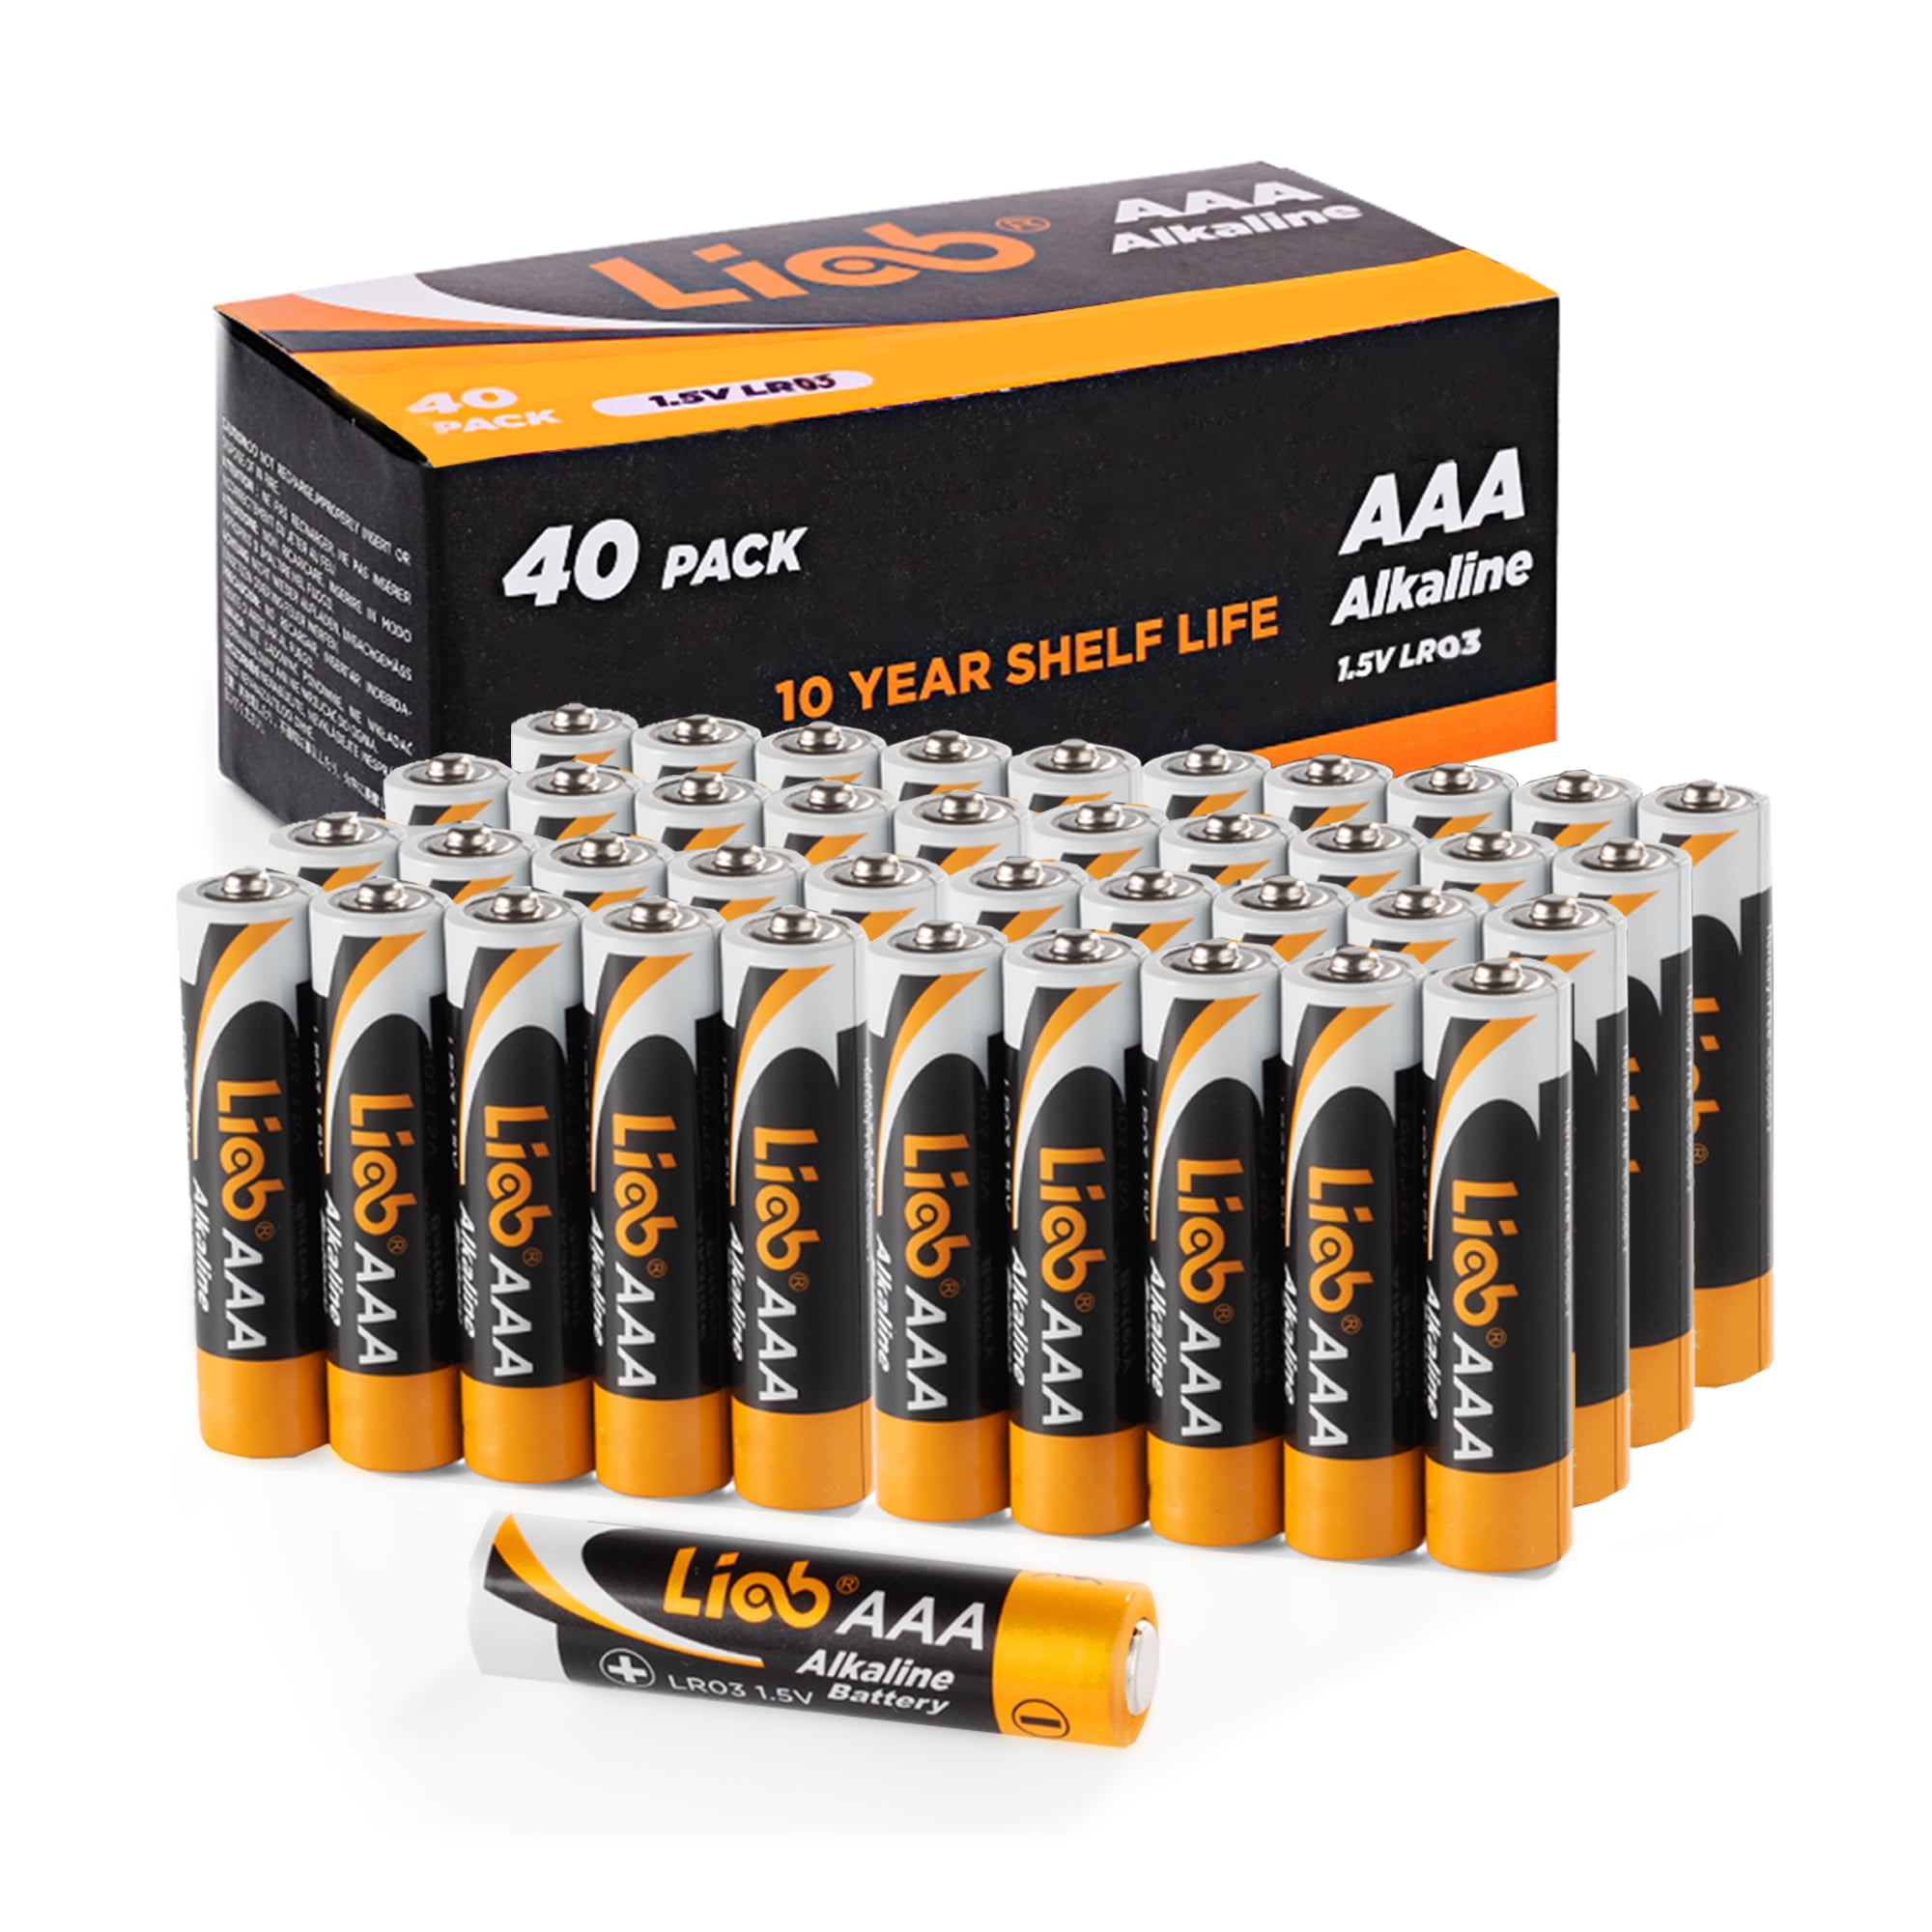 Duracell Piles Rechargeables AAA 750 Mah, lot de 8 piles [ exclusive]